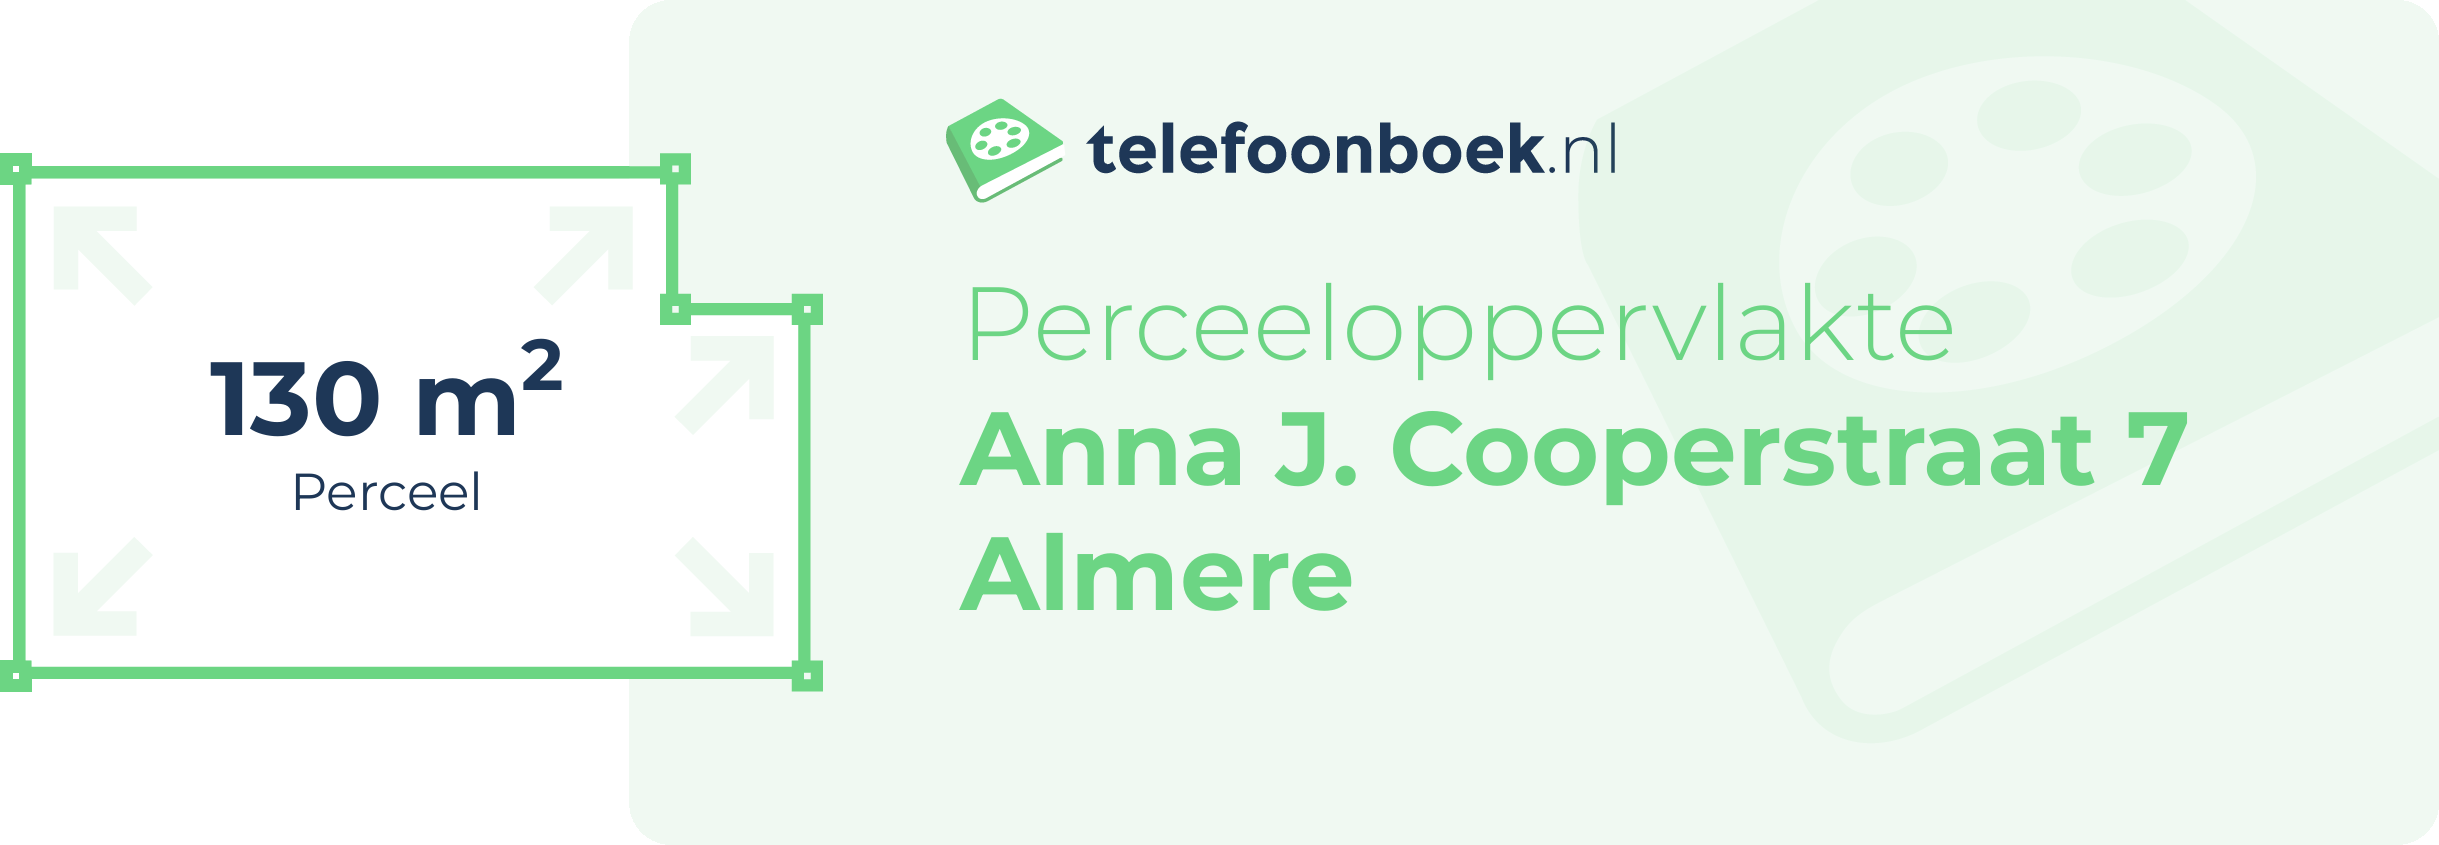 Perceeloppervlakte Anna J. Cooperstraat 7 Almere